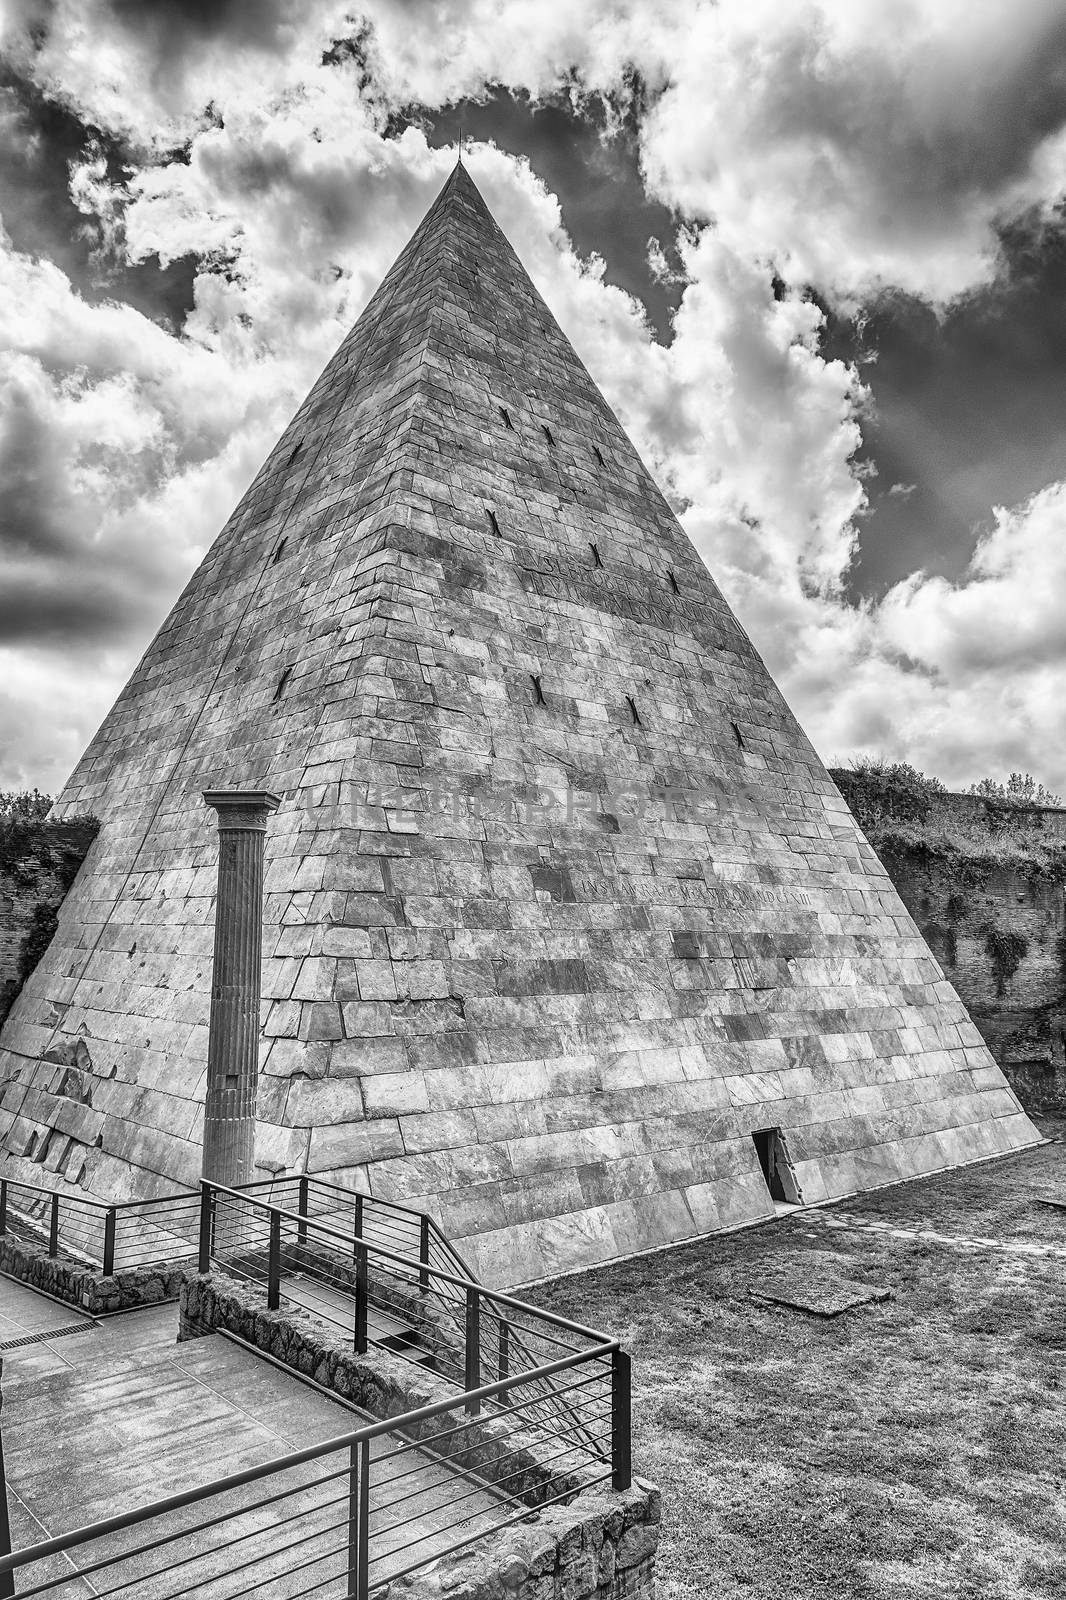 Scenic view of the Pyramid of Cestius, iconic landmark in Testaccio district in Rome, Italy